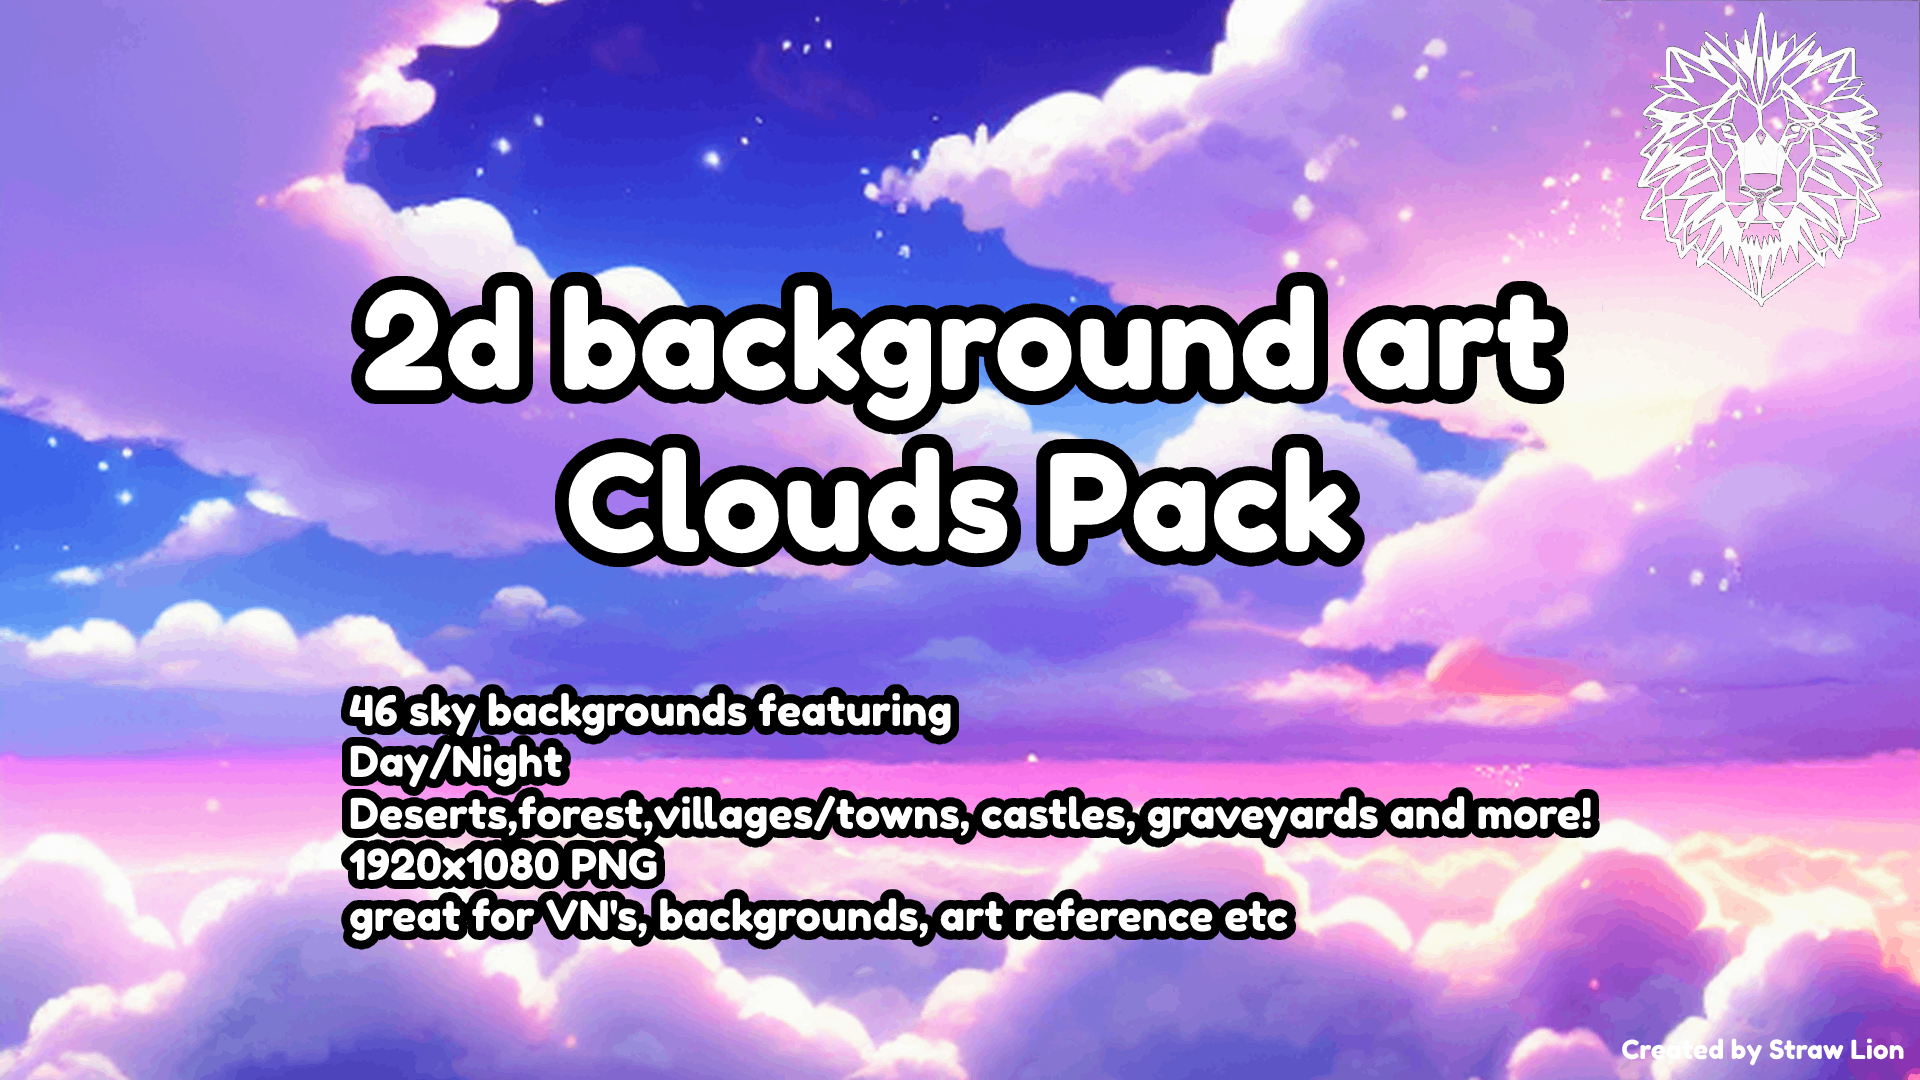 Cloud & Skies Backgrounds 2d Art Pack